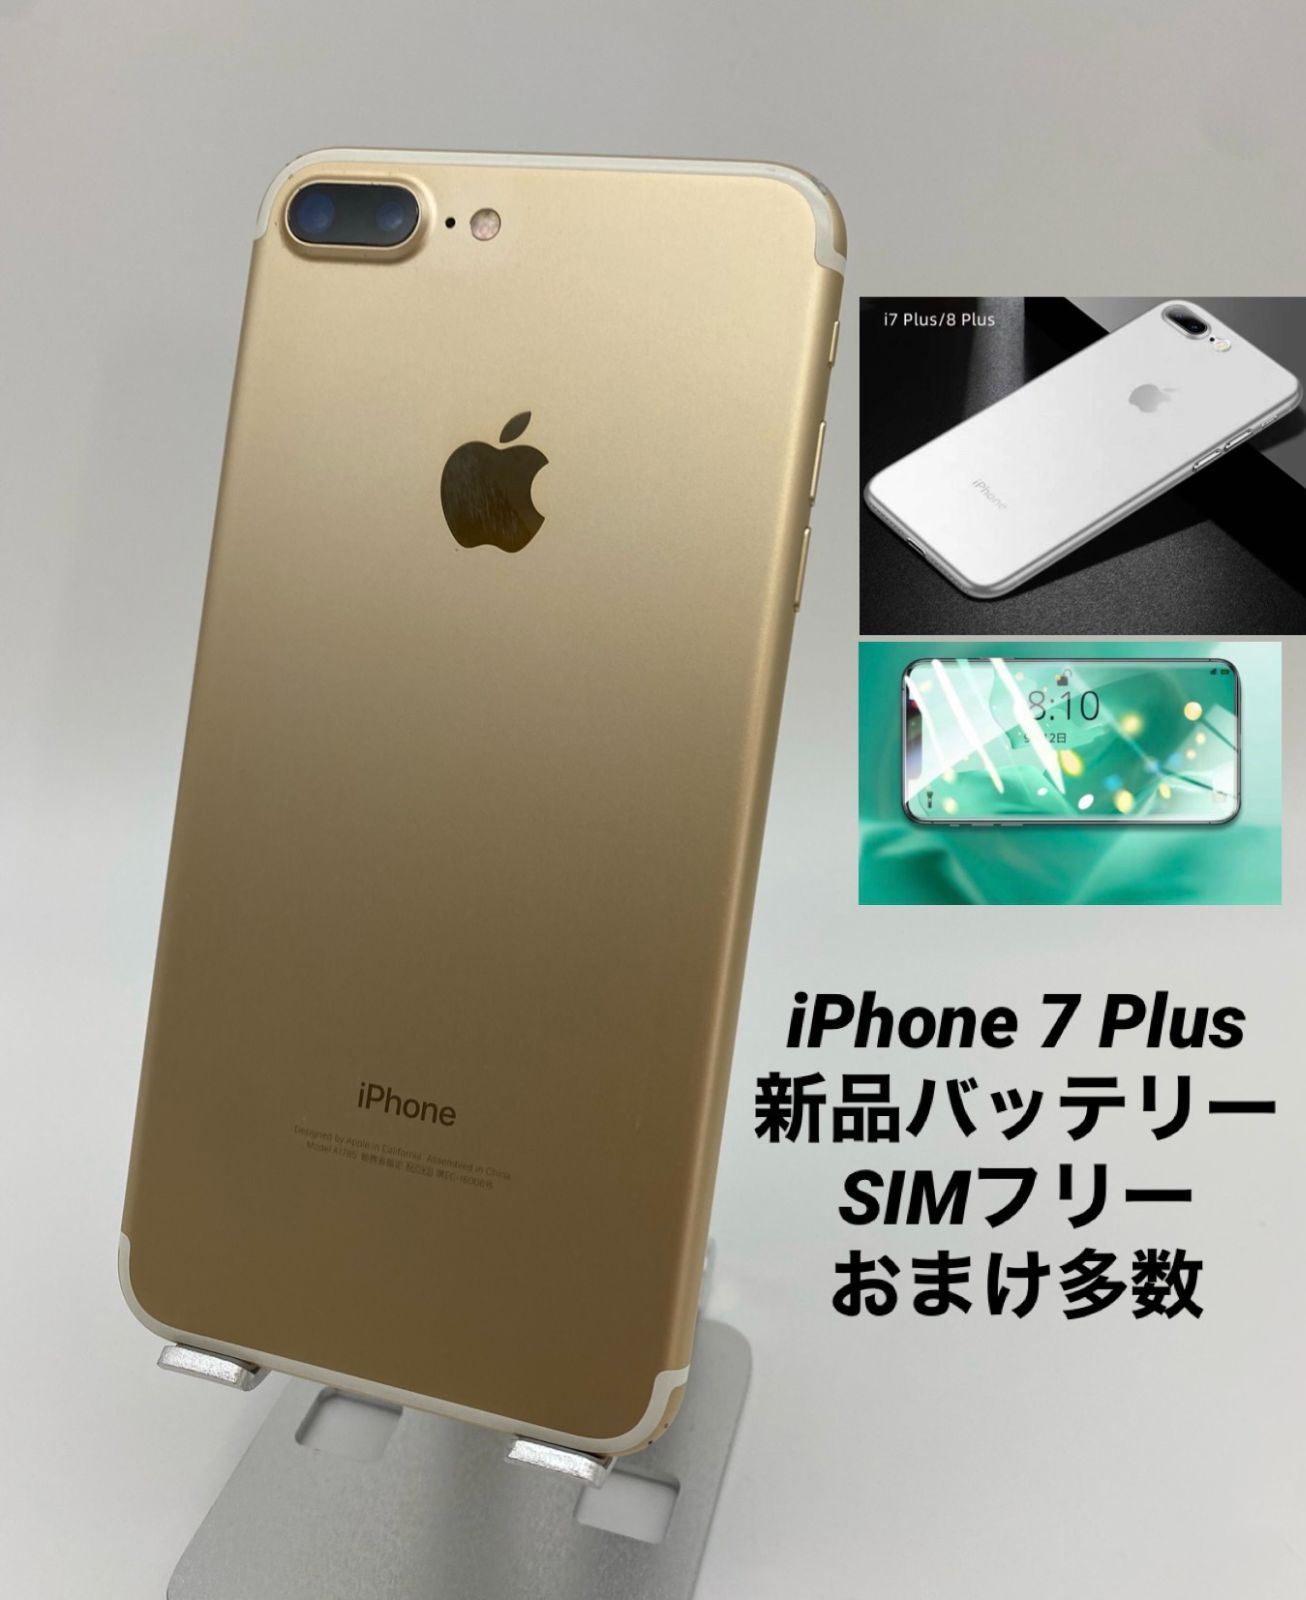 iPhone7 Plus 128GB ゴールド/シムフリー/大容量3400mAh新品バッテリー